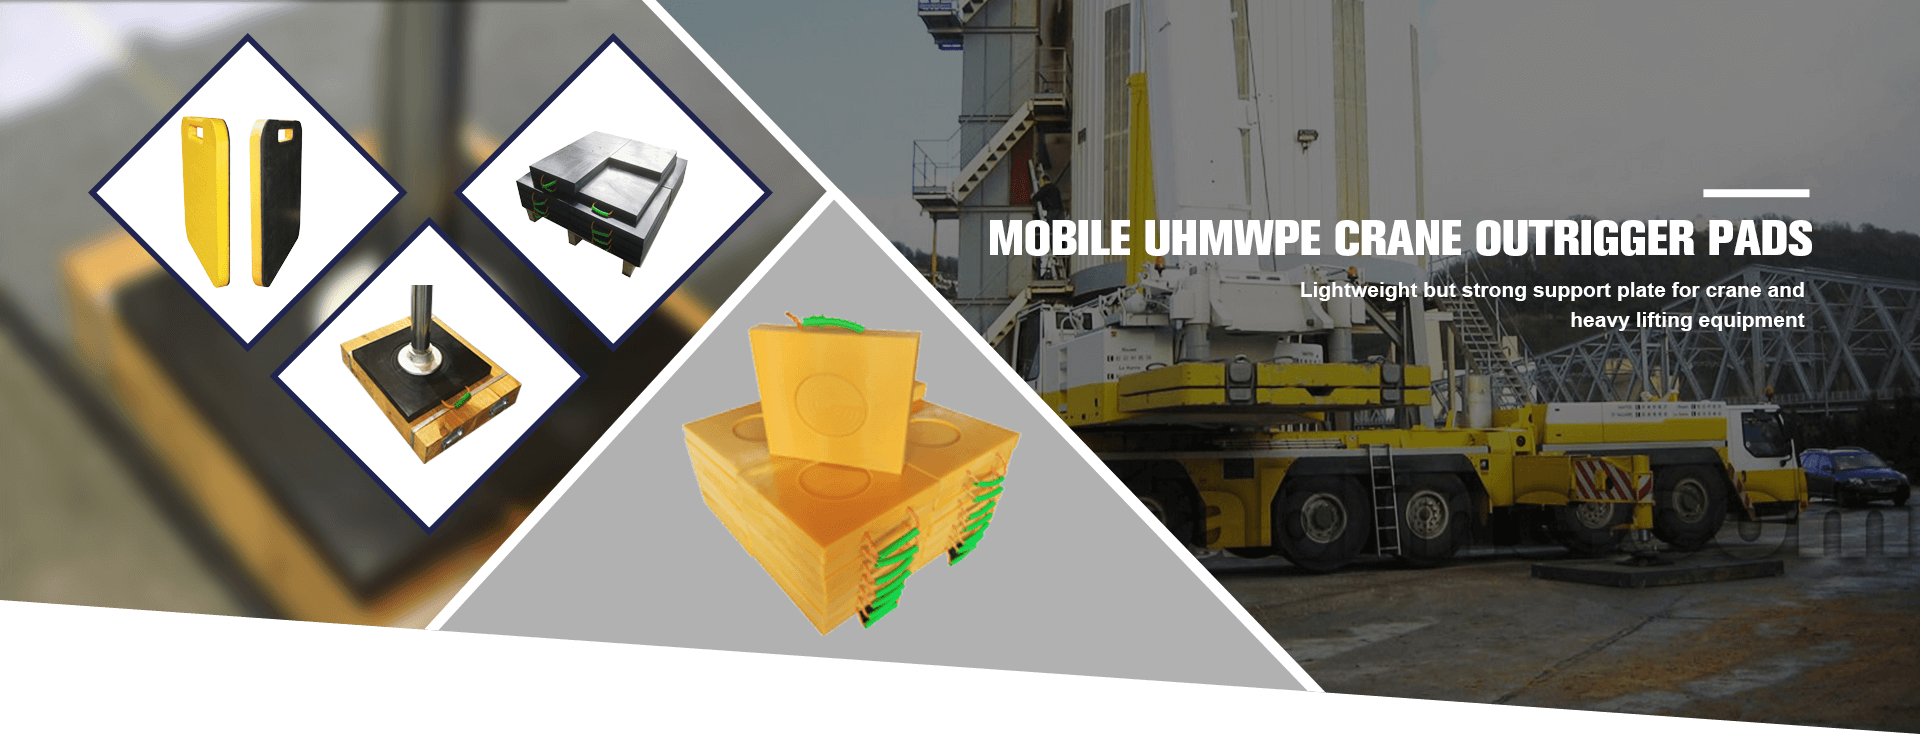 Mobile UHMWPE Crane Outrigger Pads